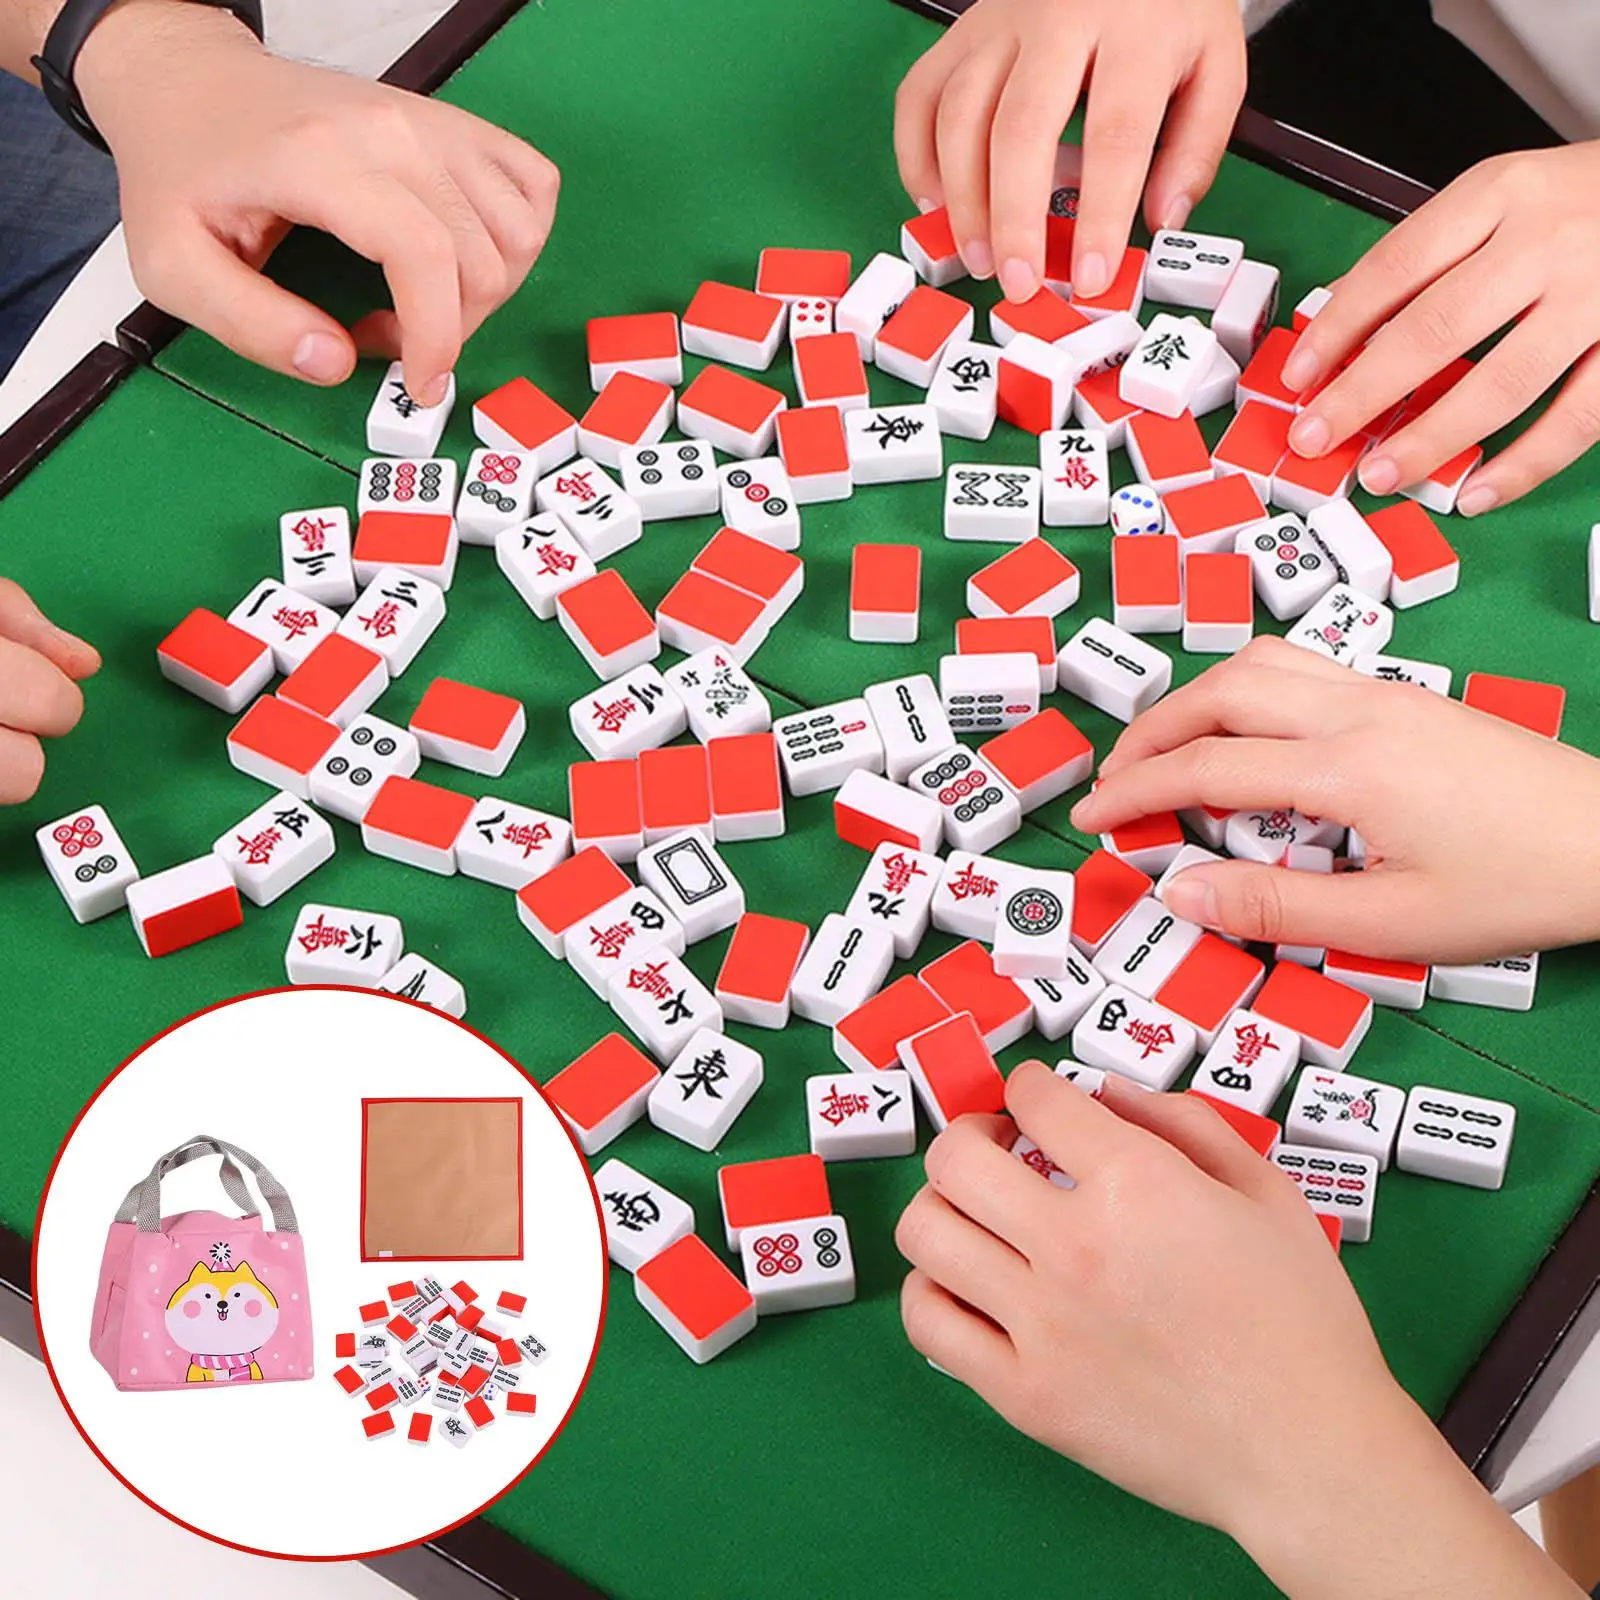 Mini Mahjong Set Activity Game Board Game Traditional Mahjong Set for Party